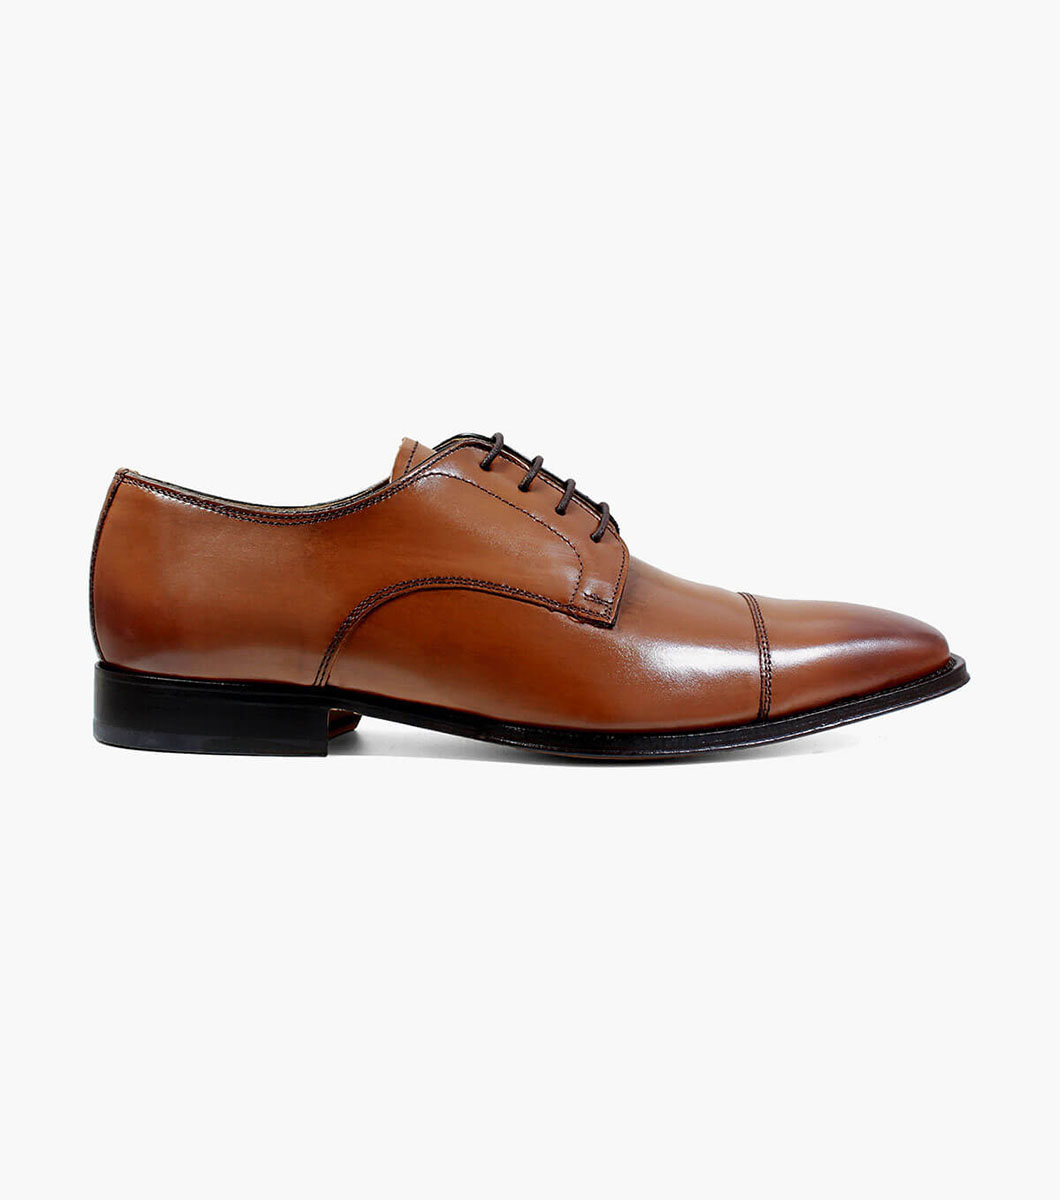 Men’s Dress Shoes | Cognac Cap Toe Oxford | Florsheim Classico